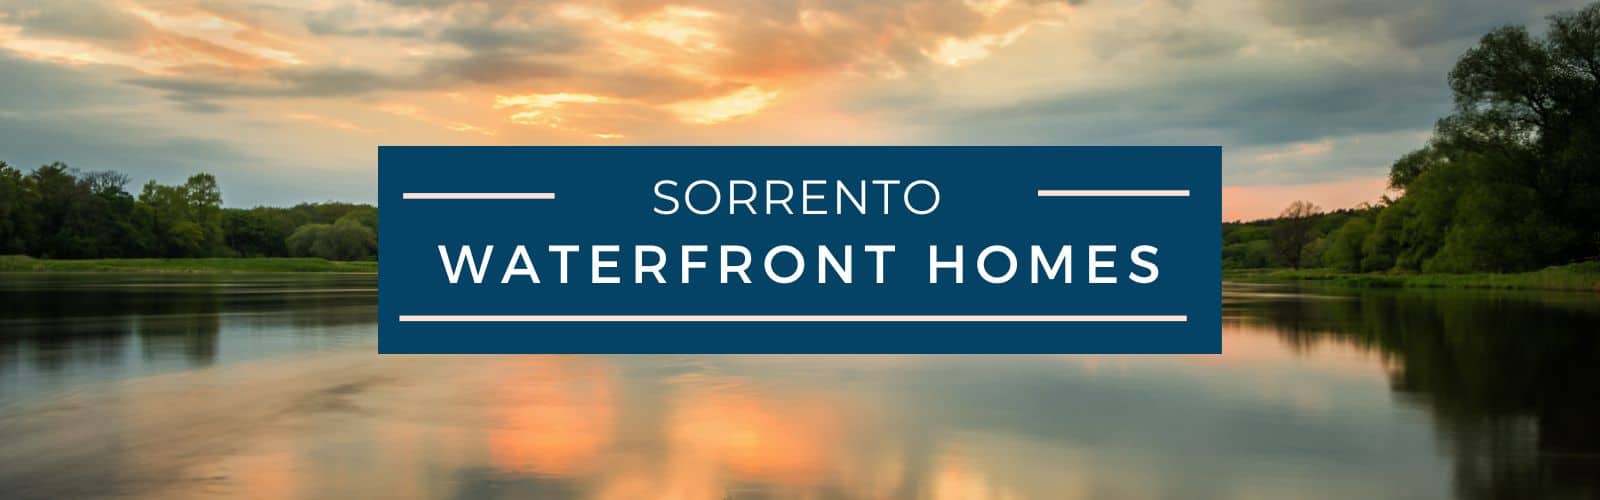 Sorrento Waterfront Homes